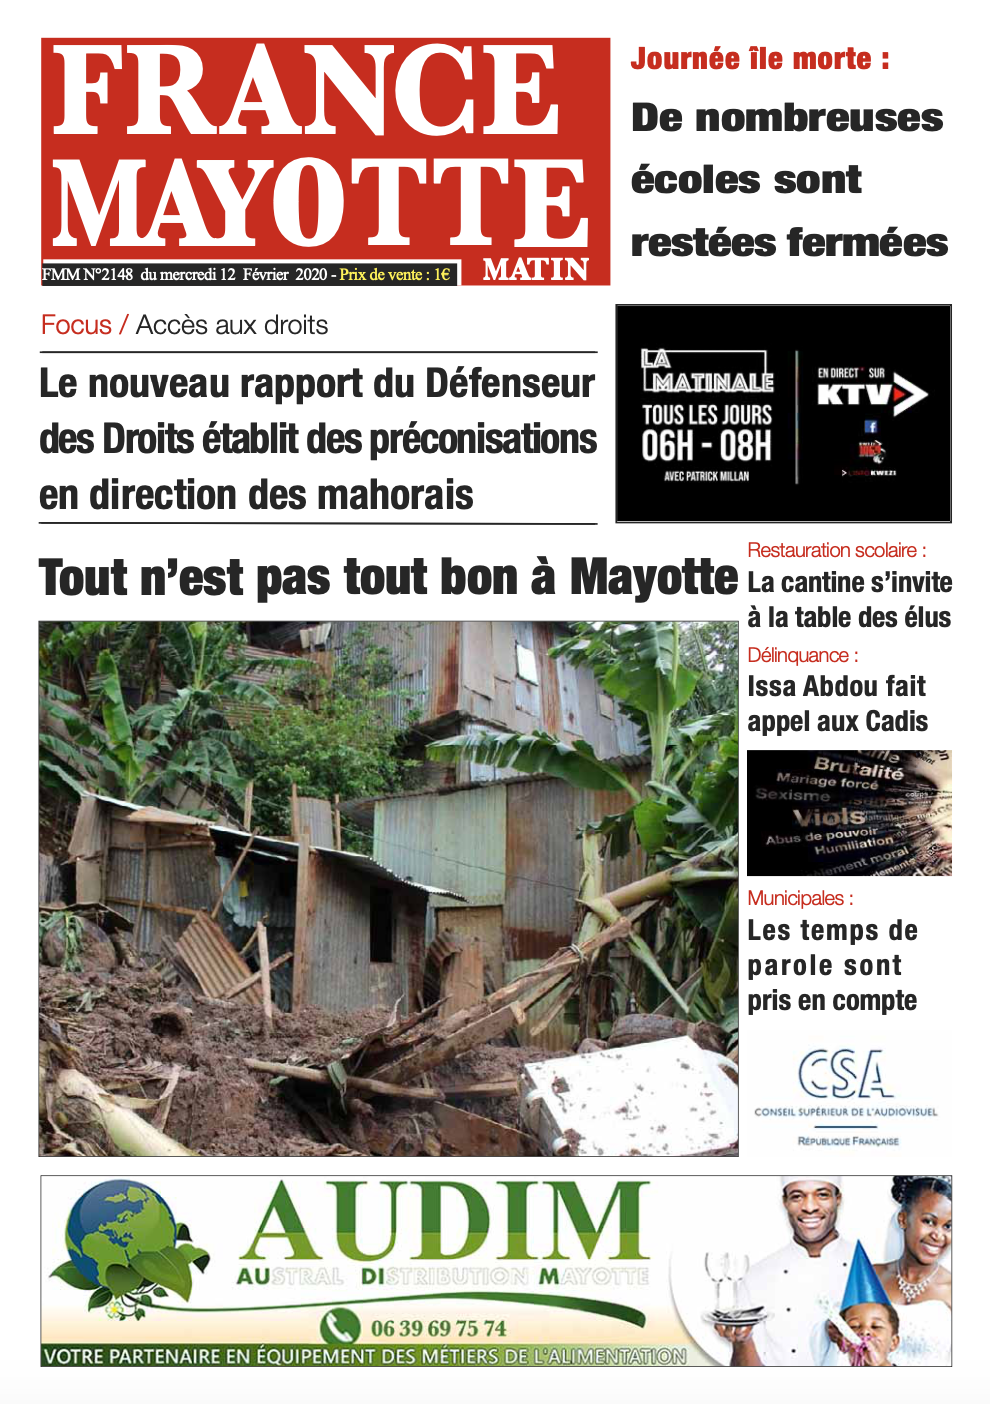 France Mayotte Mercredi 12 février 2020